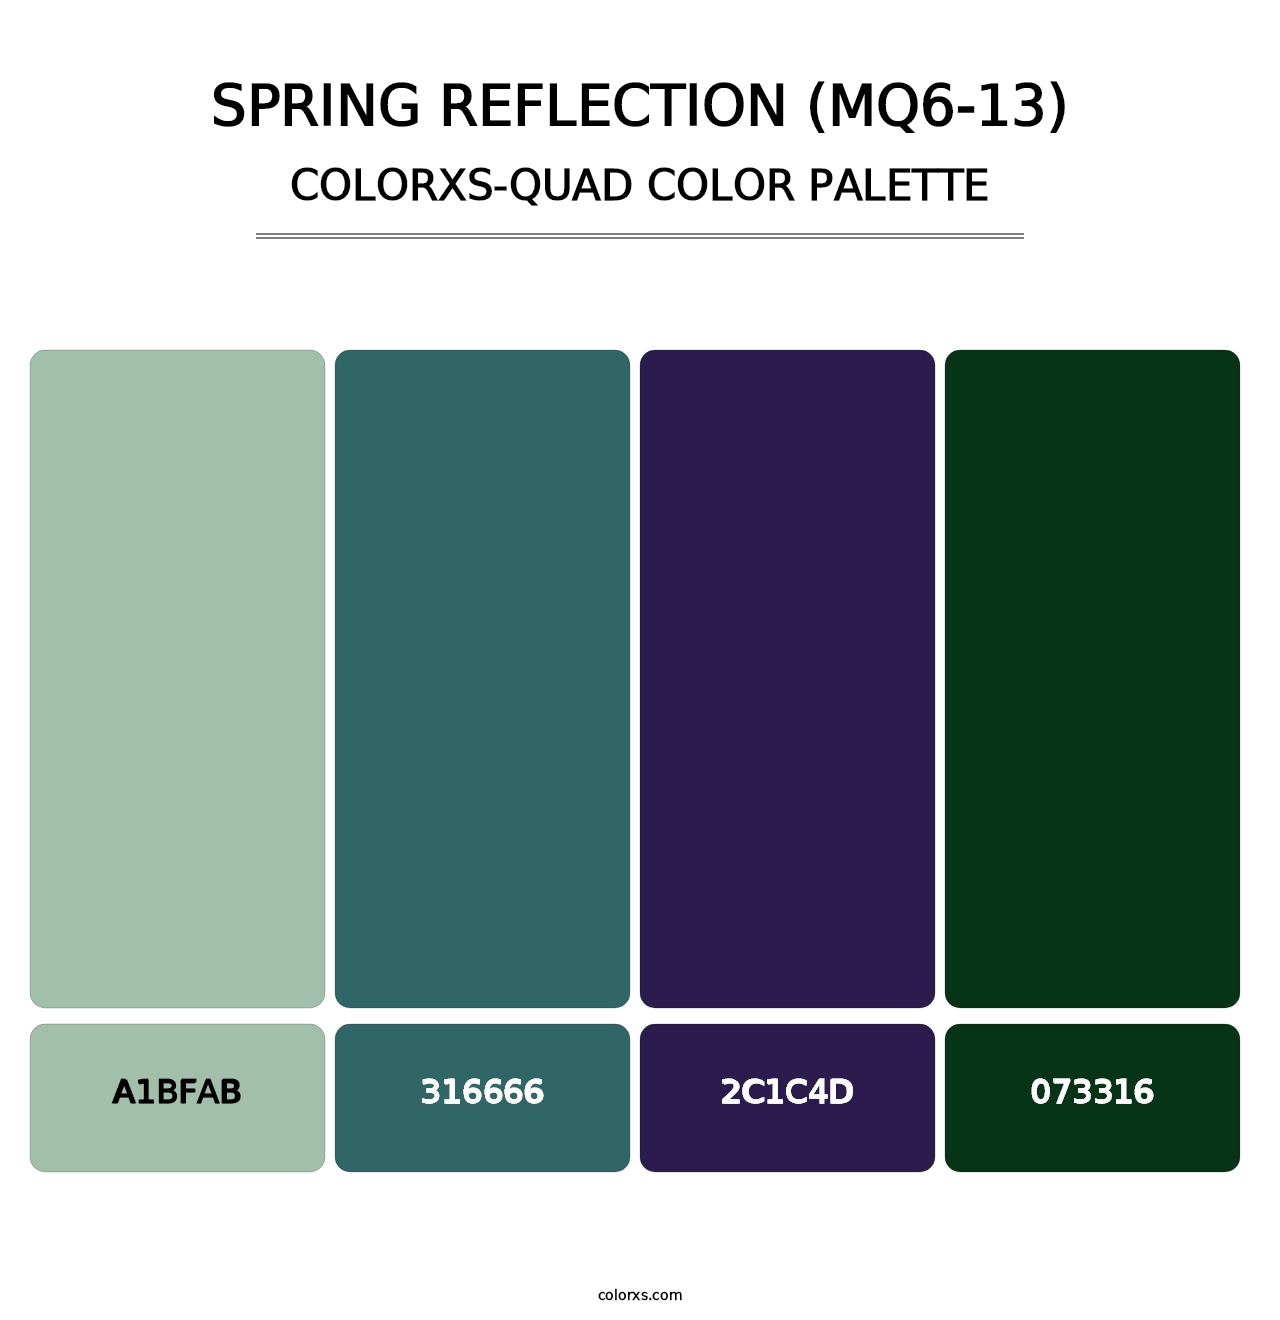 Spring Reflection (MQ6-13) - Colorxs Quad Palette